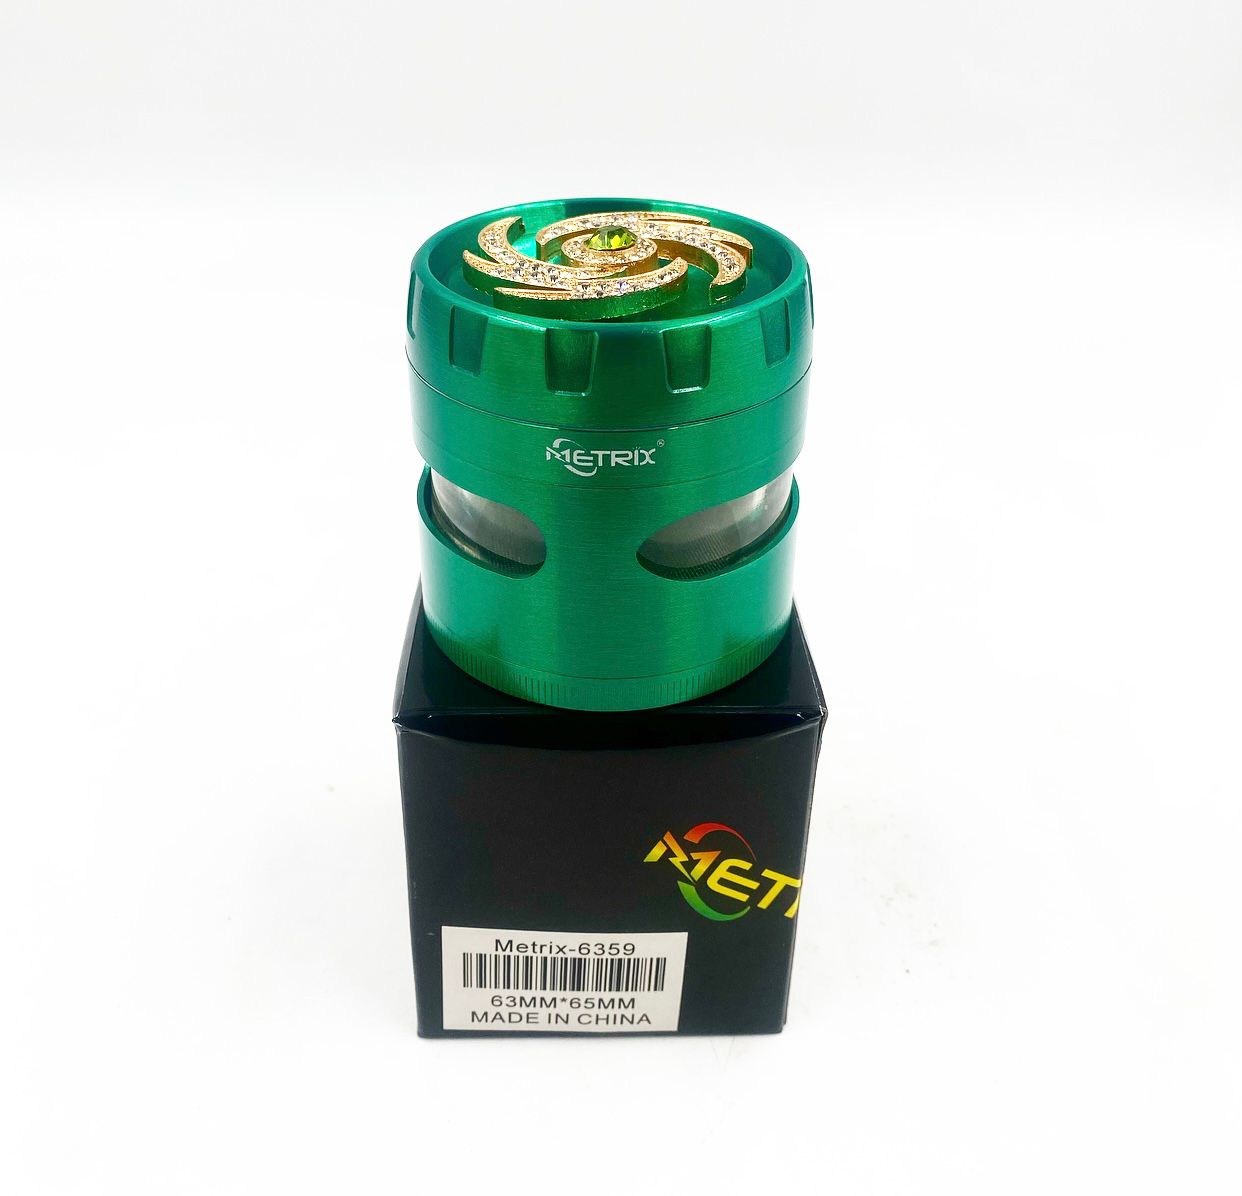 Metrix-6359 Green Spin Grinder